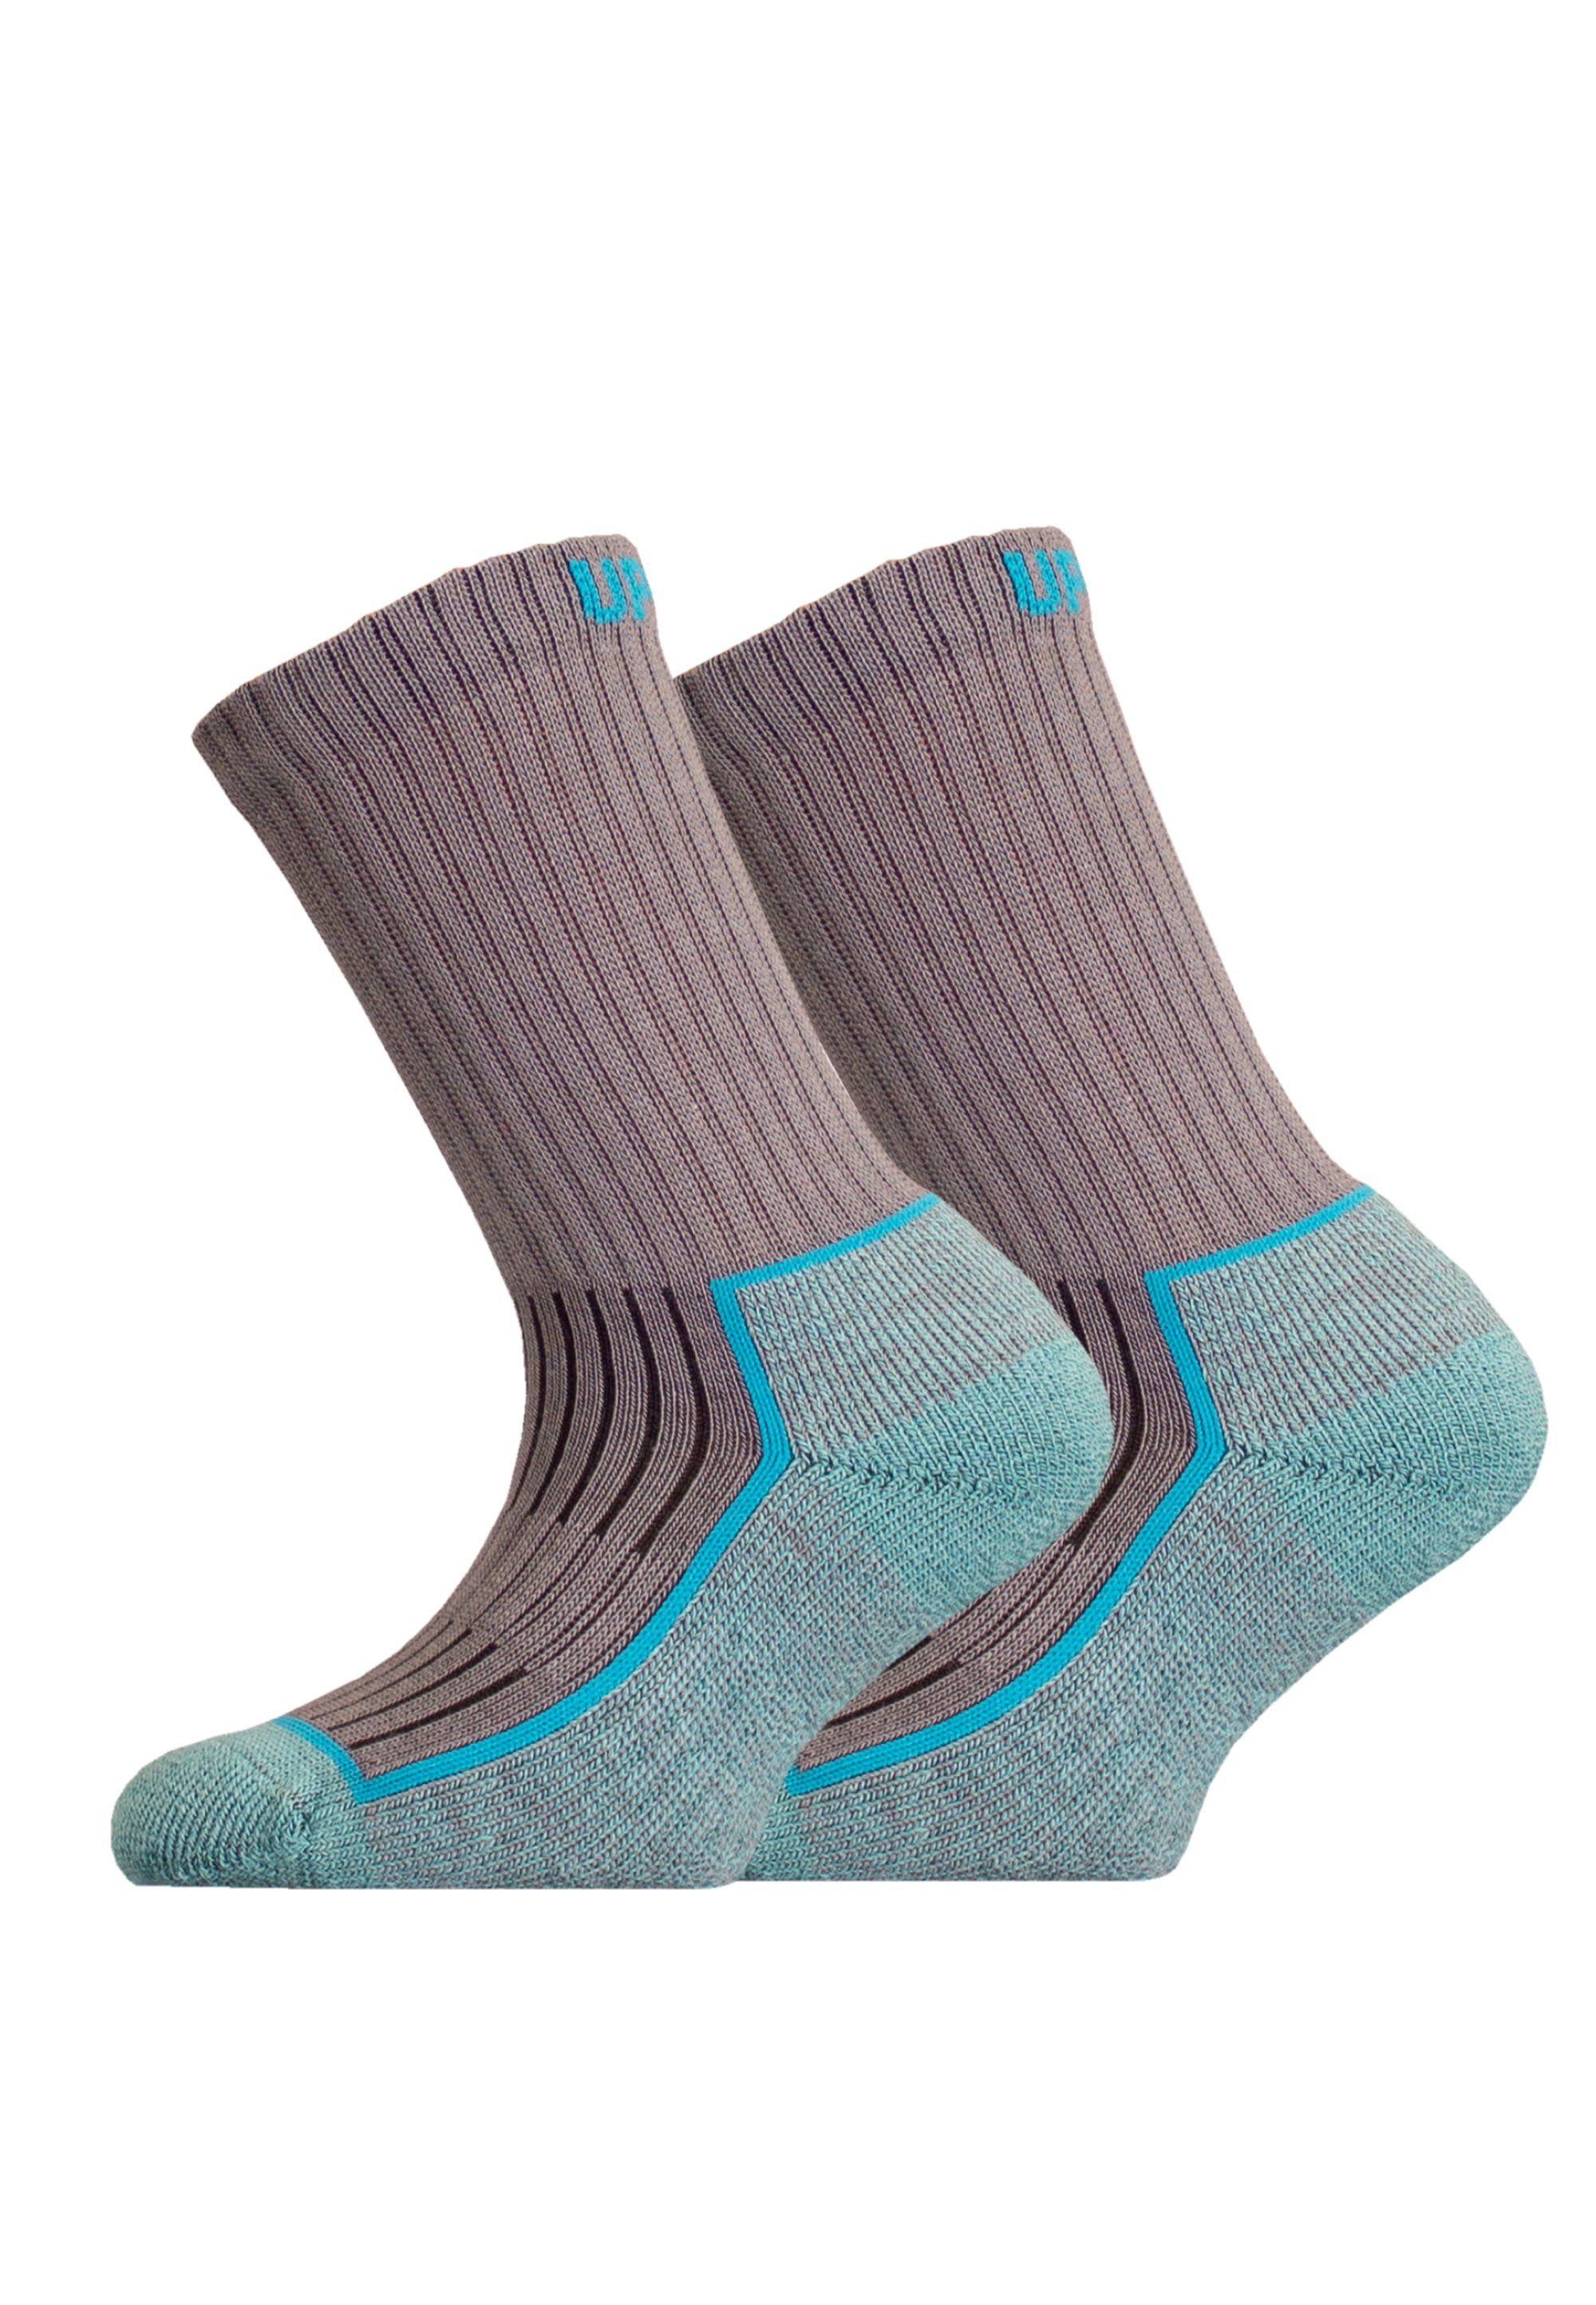 UphillSport Socken (2-Paar) grau JR 2er Pack SAANA mit Flextech-Struktur